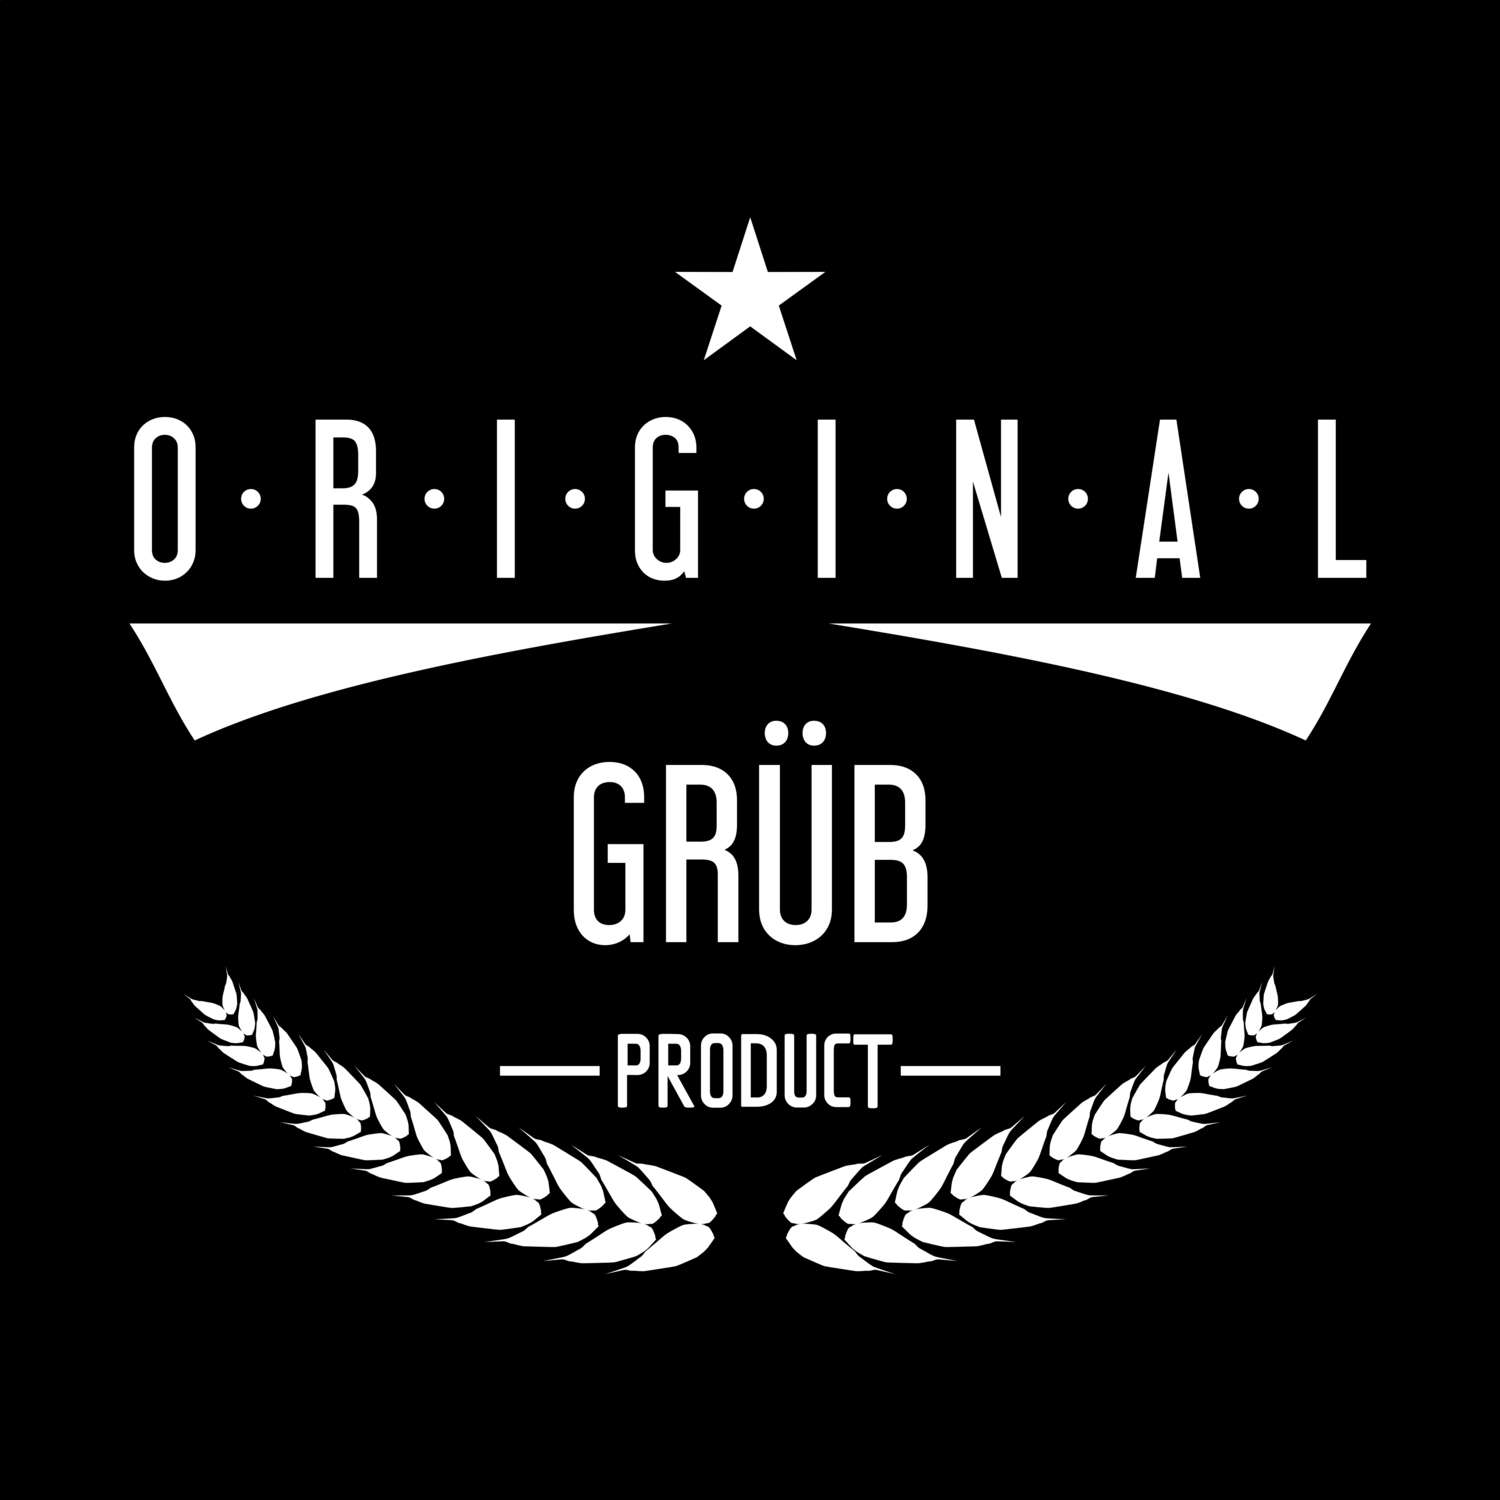 Grüb T-Shirt »Original Product«